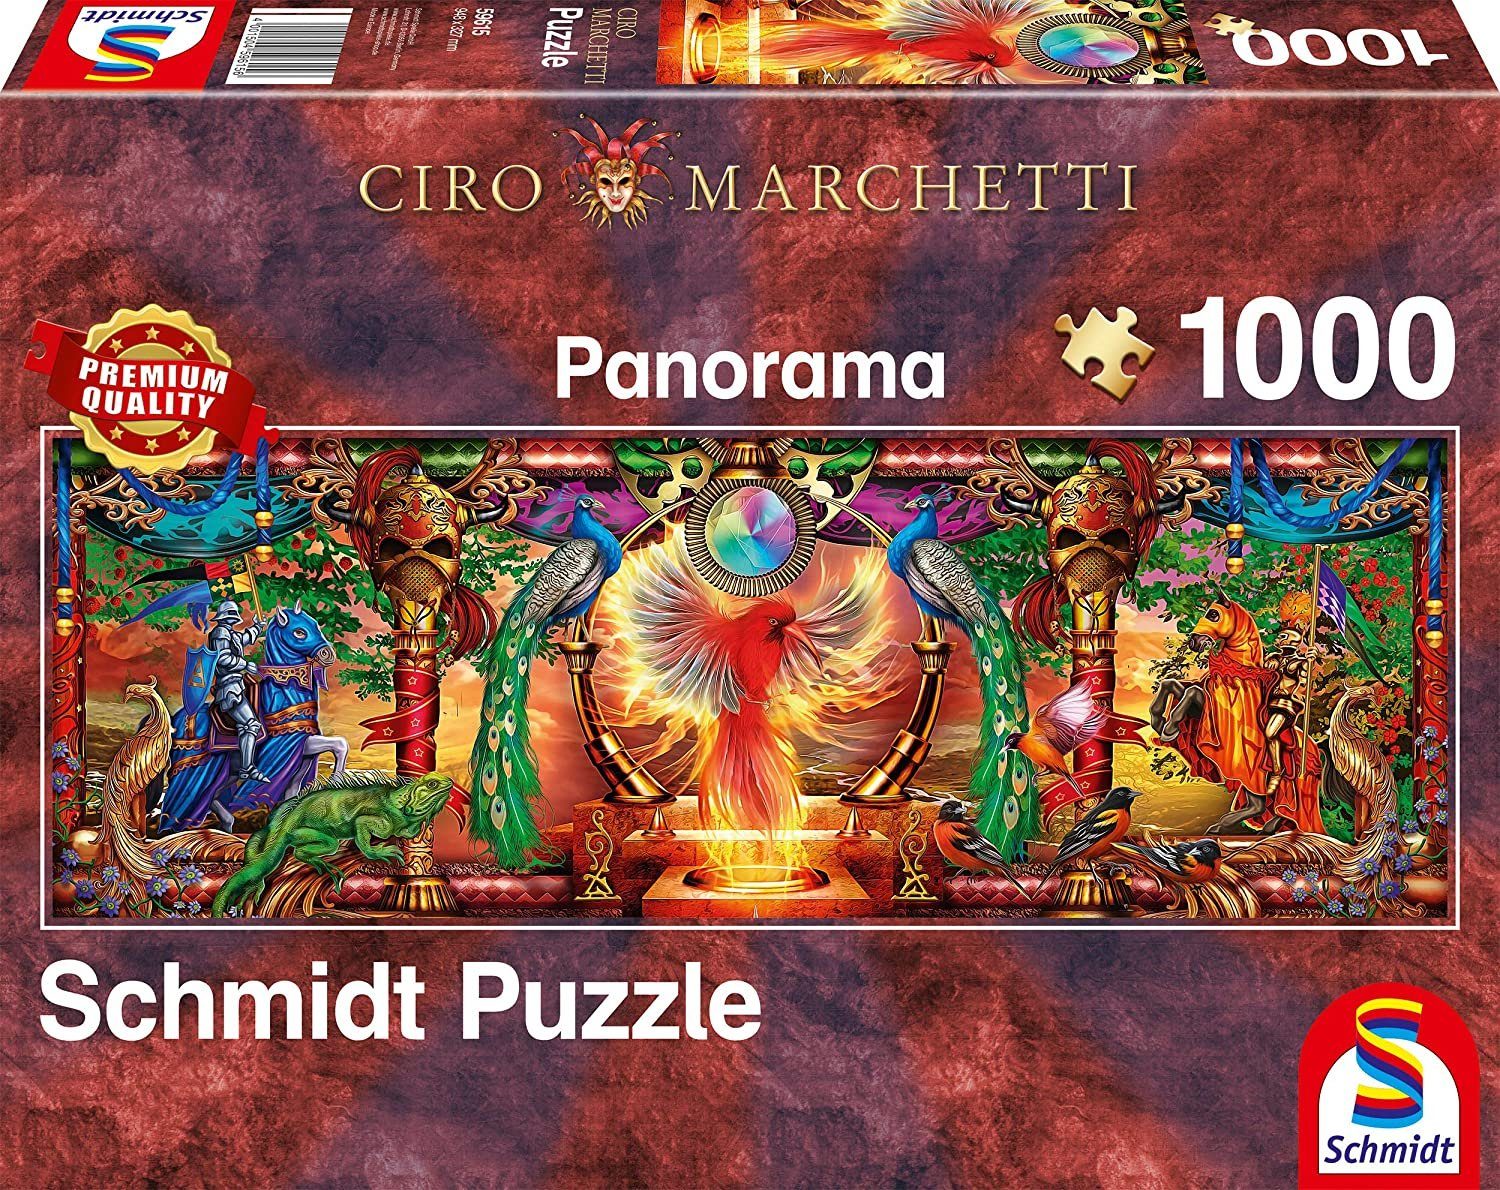 Schmidt Spiele Puzzle Schmidt 59615 - Premium Quality - Ciro Marchetti - Im Reich des Feuervogels, 1000 Teile Panorama-Puzzle, 1000 Puzzleteile